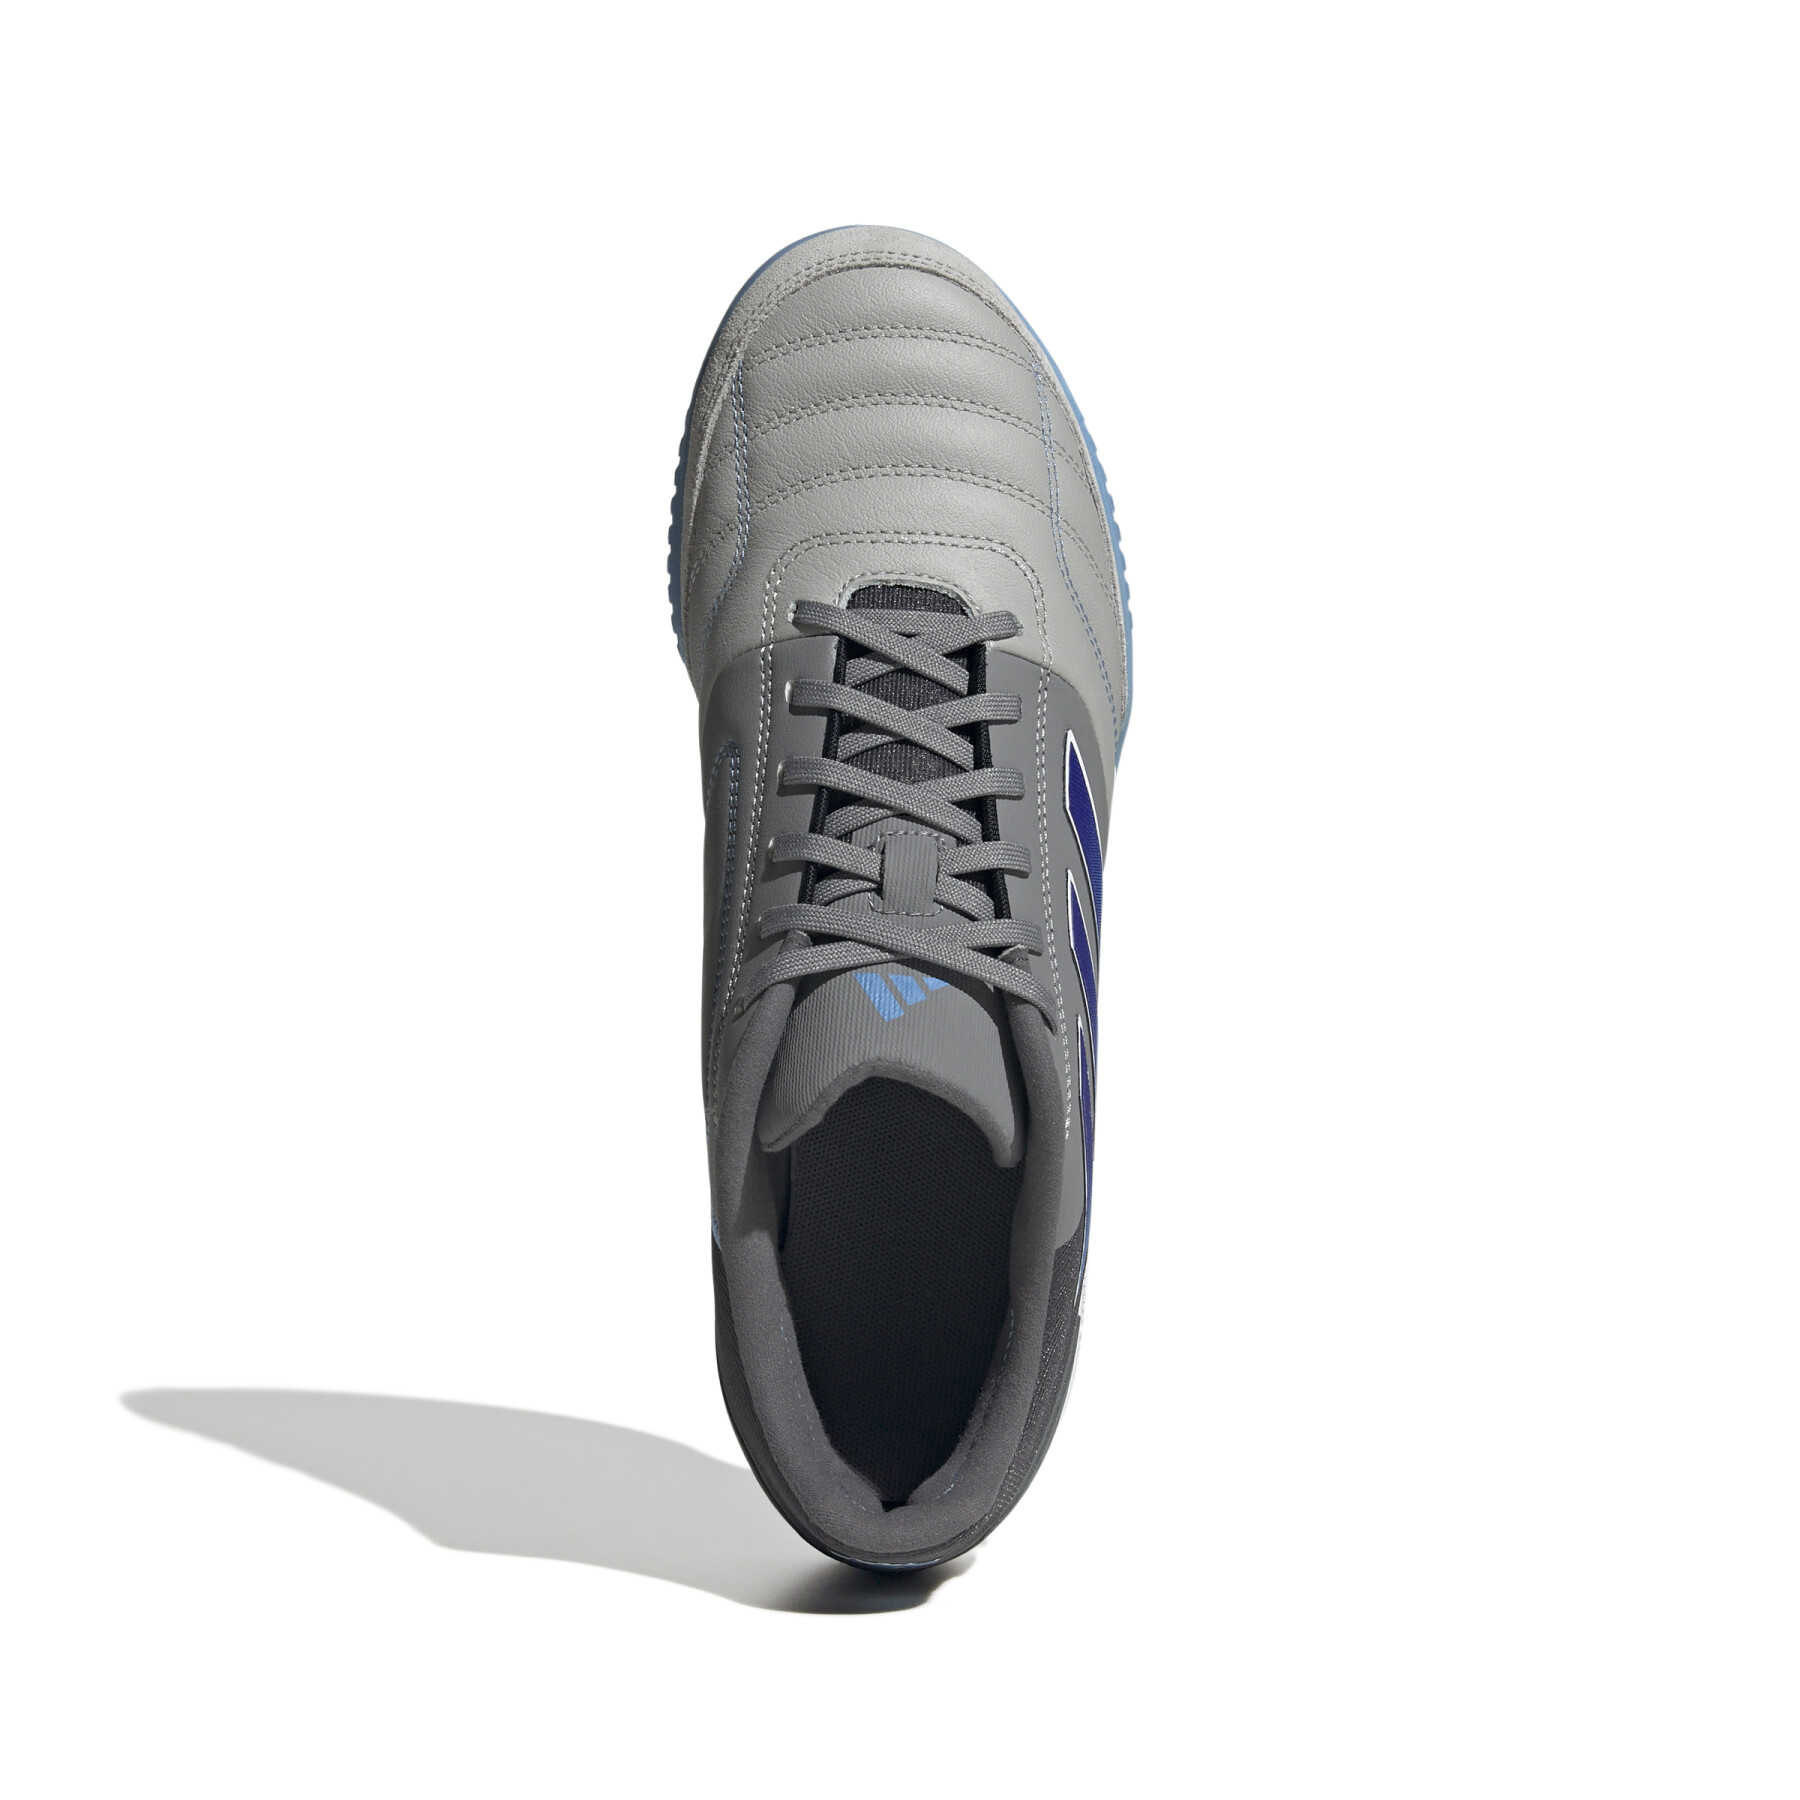 Chaussures Futsal et Football salle Prédator gris 19.4 TF Sala